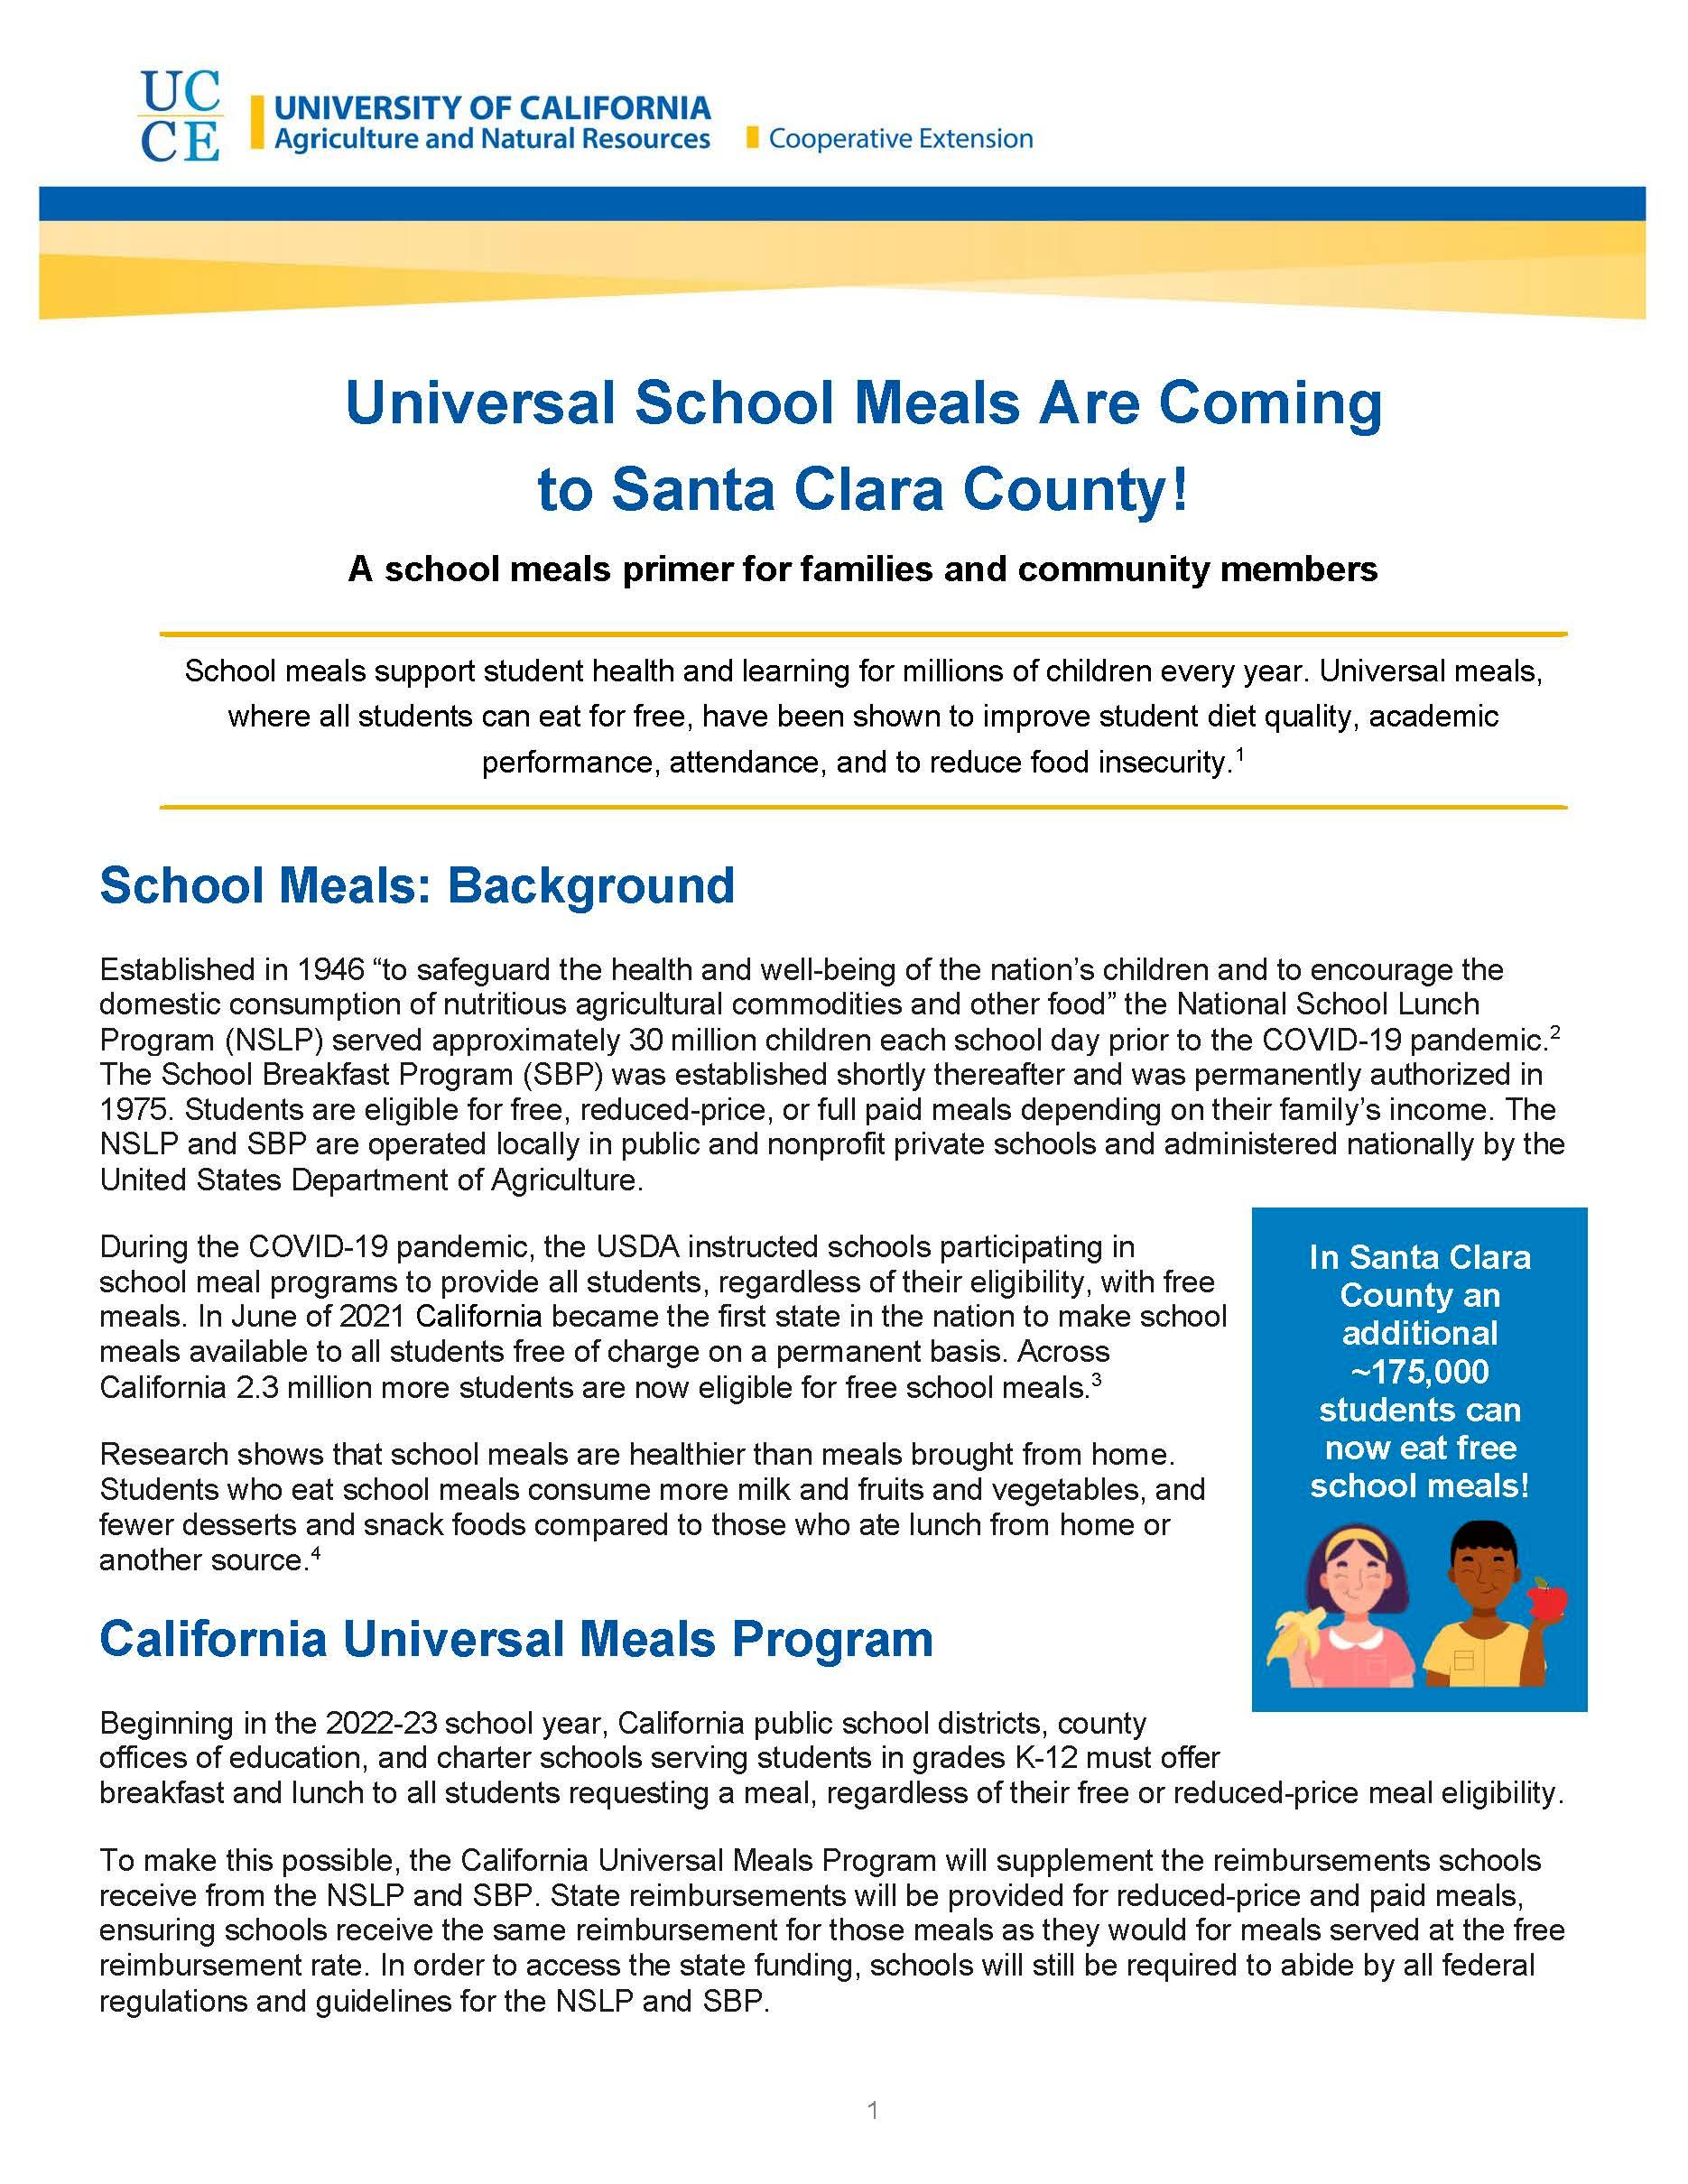 20220309 Universal Meals Factsheet_SCC linked_Page_1